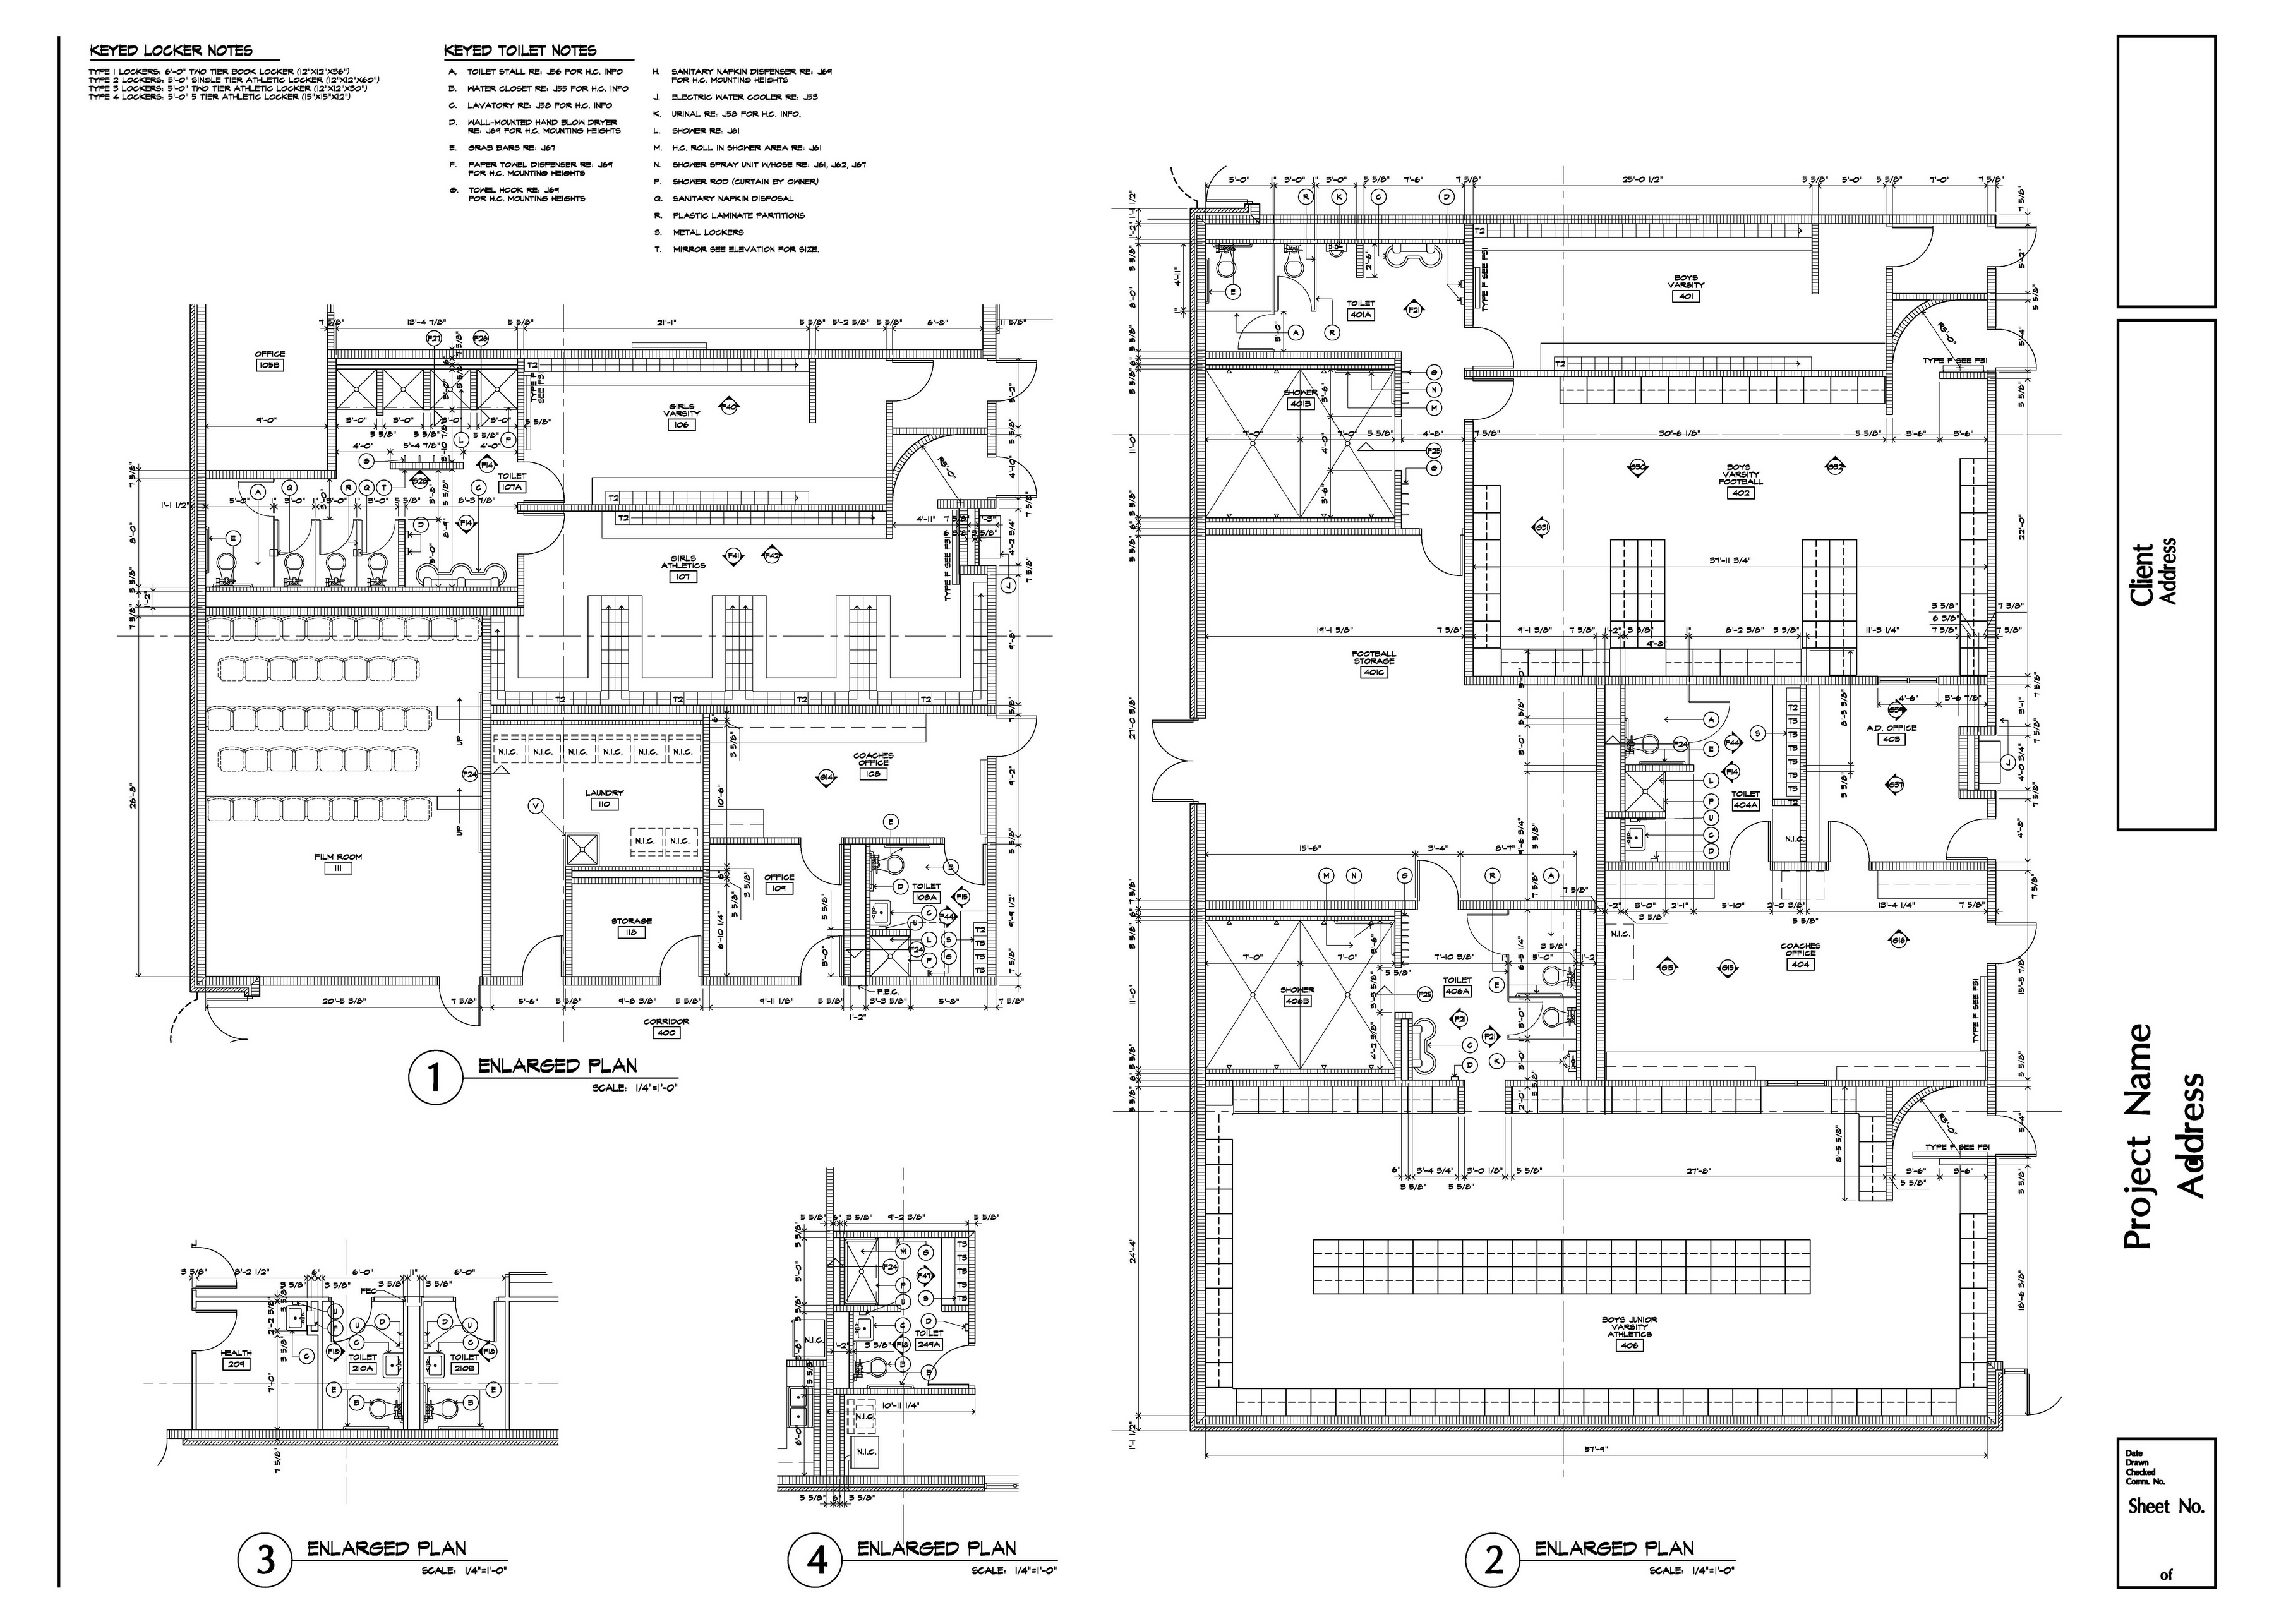 Enlarged Architectural Floor Plan